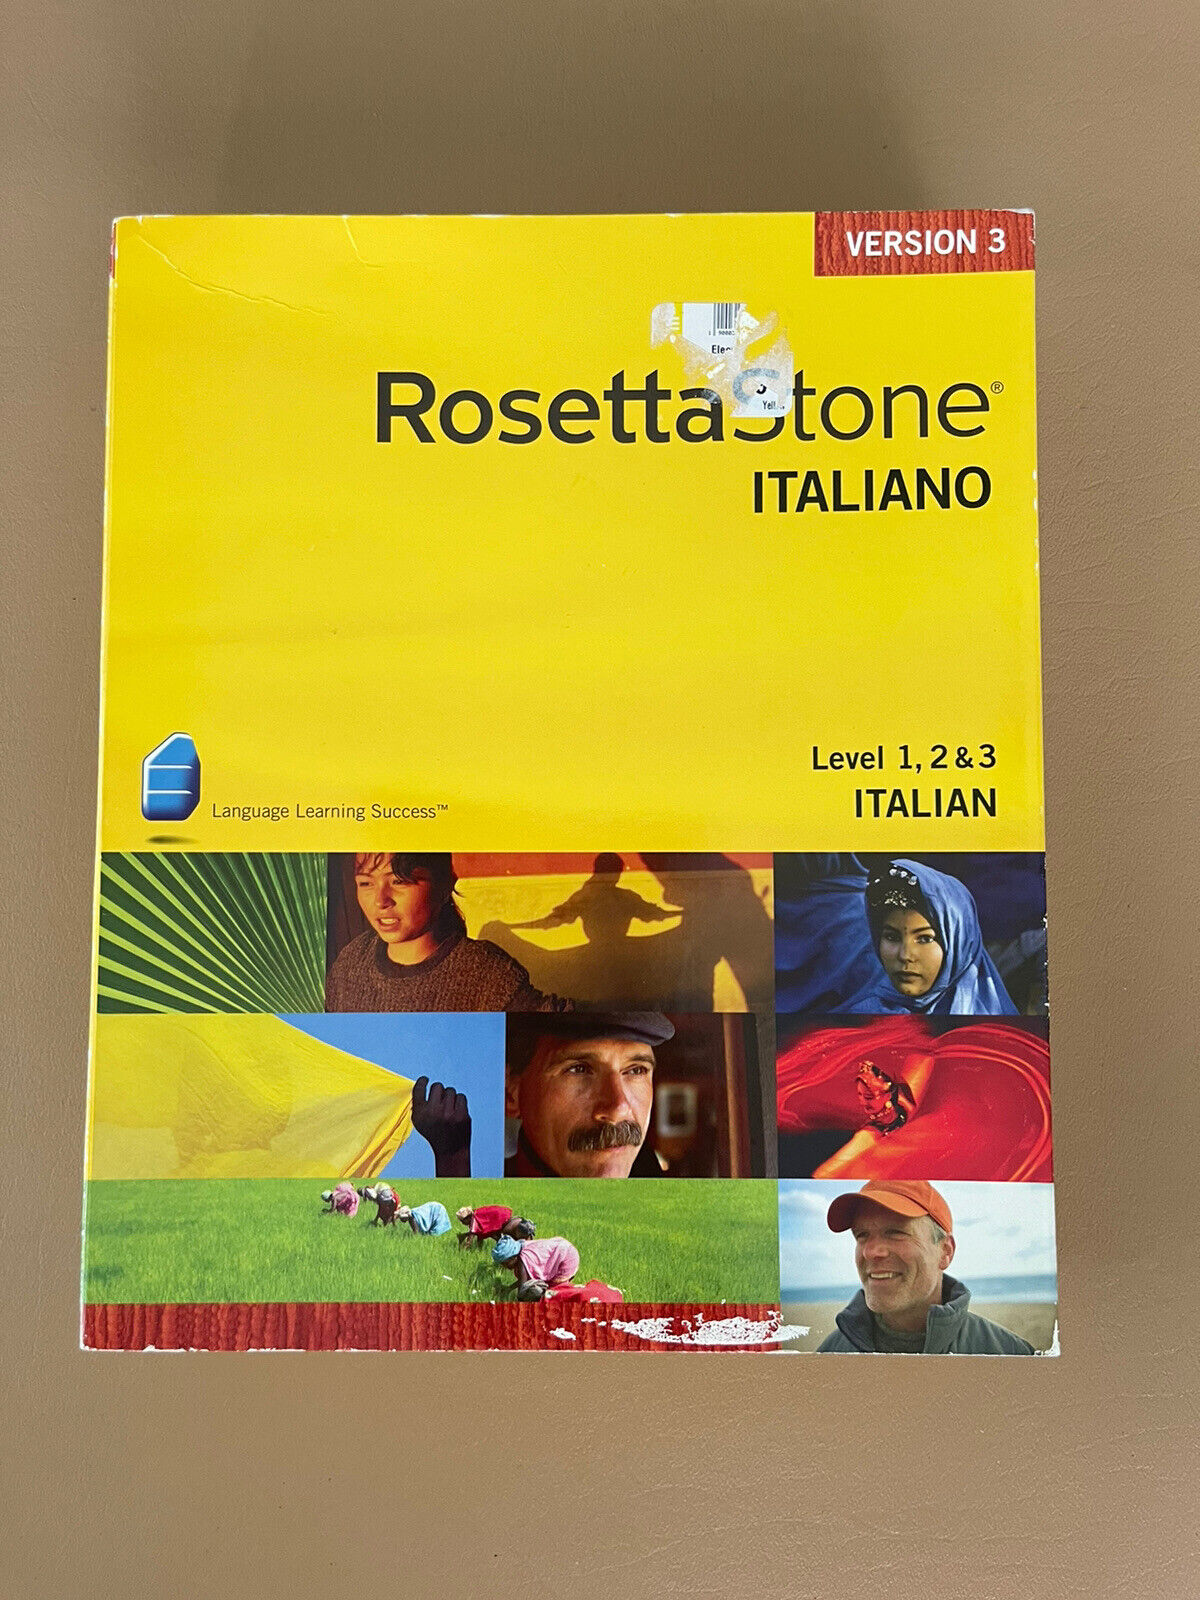 Rosetta Stone Italiano Level 1,2 & 3